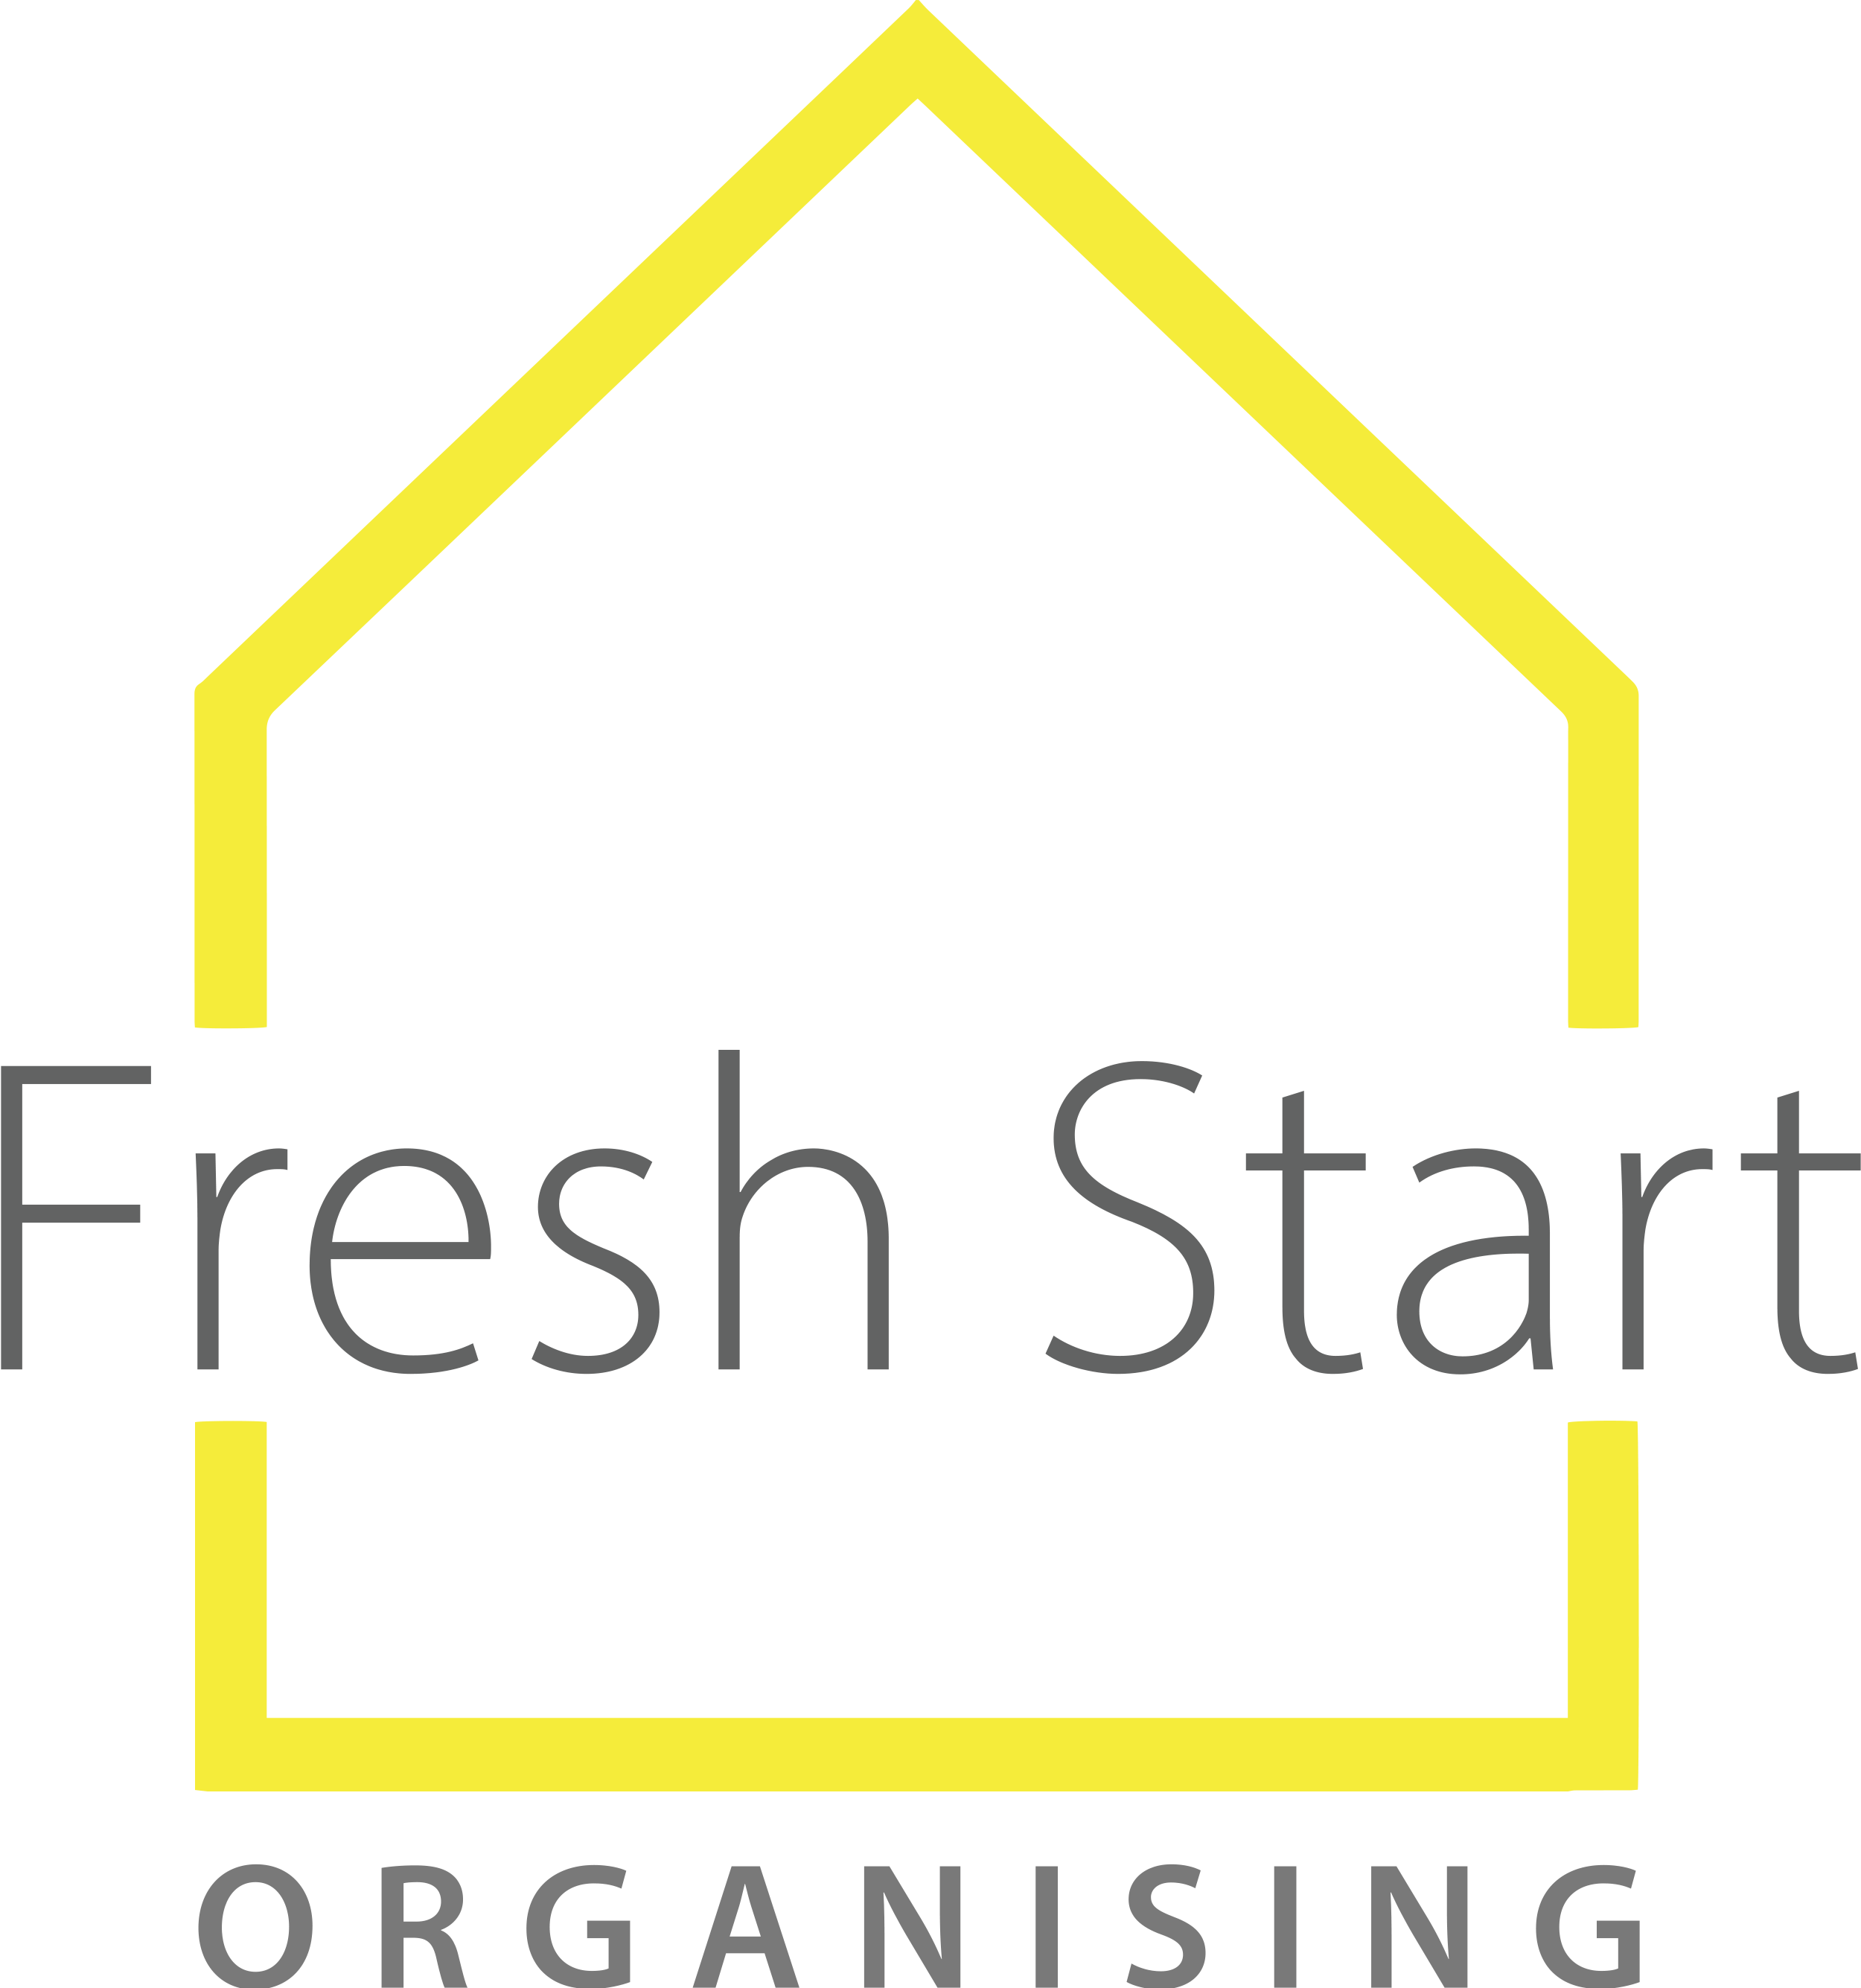 Fresh Start Organising